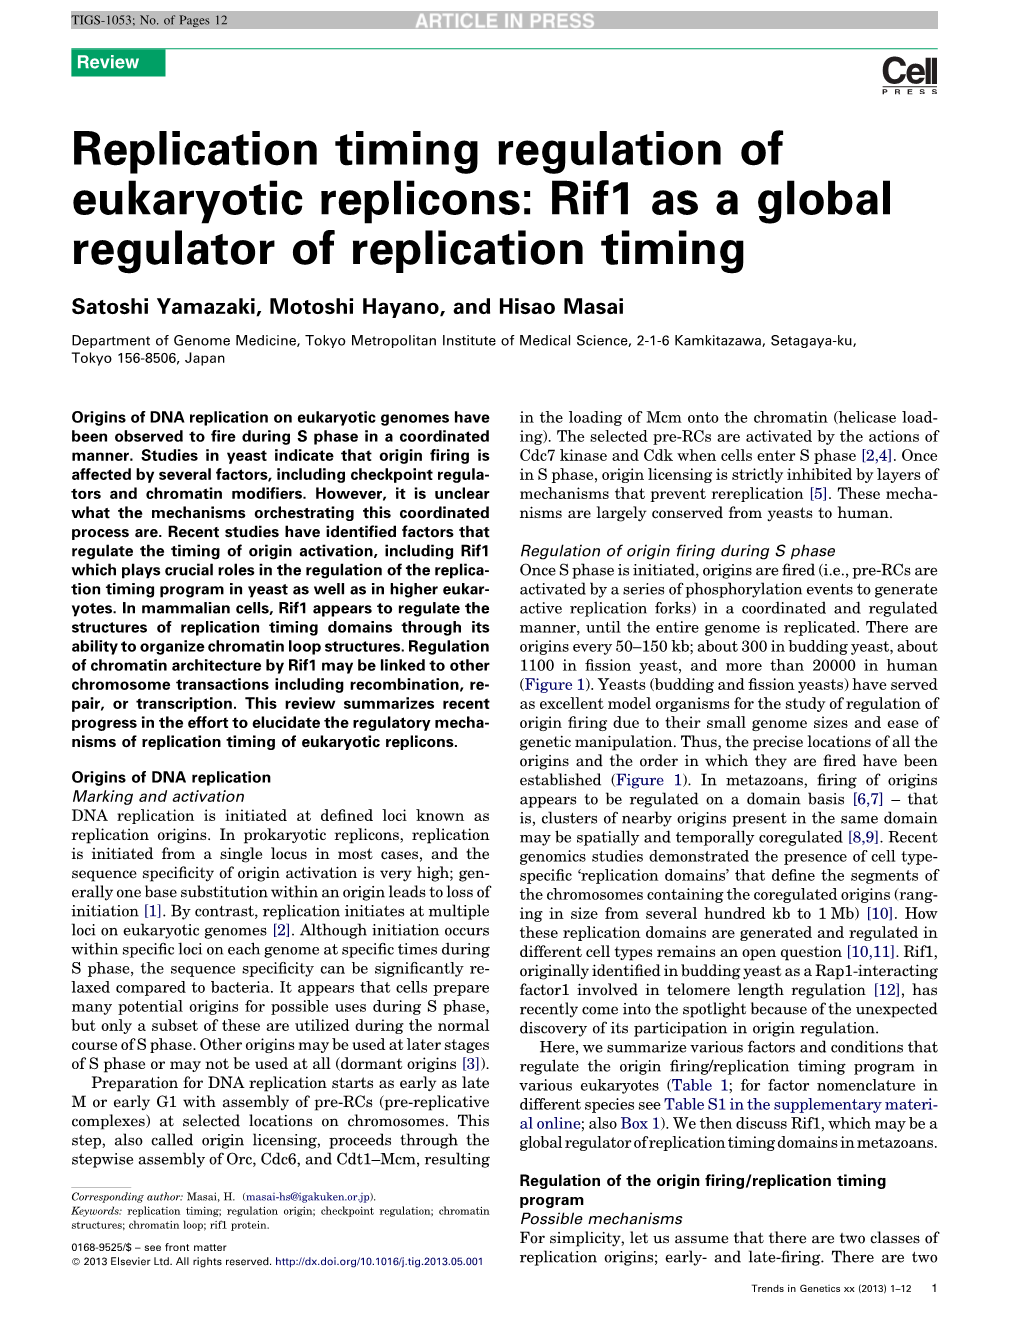 Replication Timing Regulation of Eukaryotic Replicons: Rif1 As A